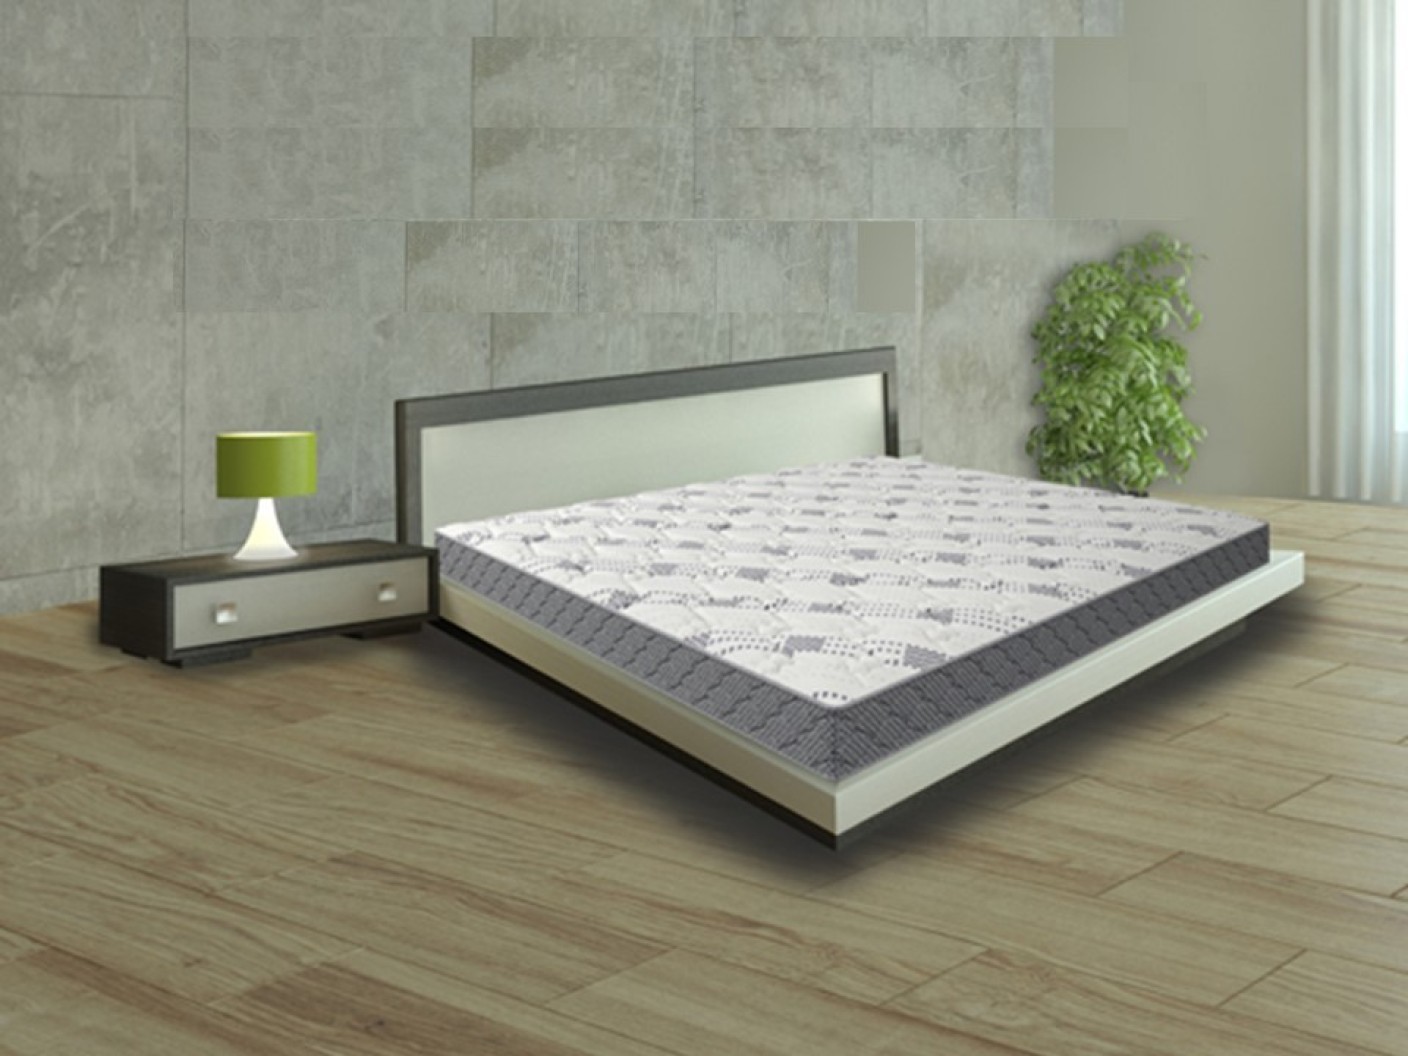 king size bed mattress sleepwell